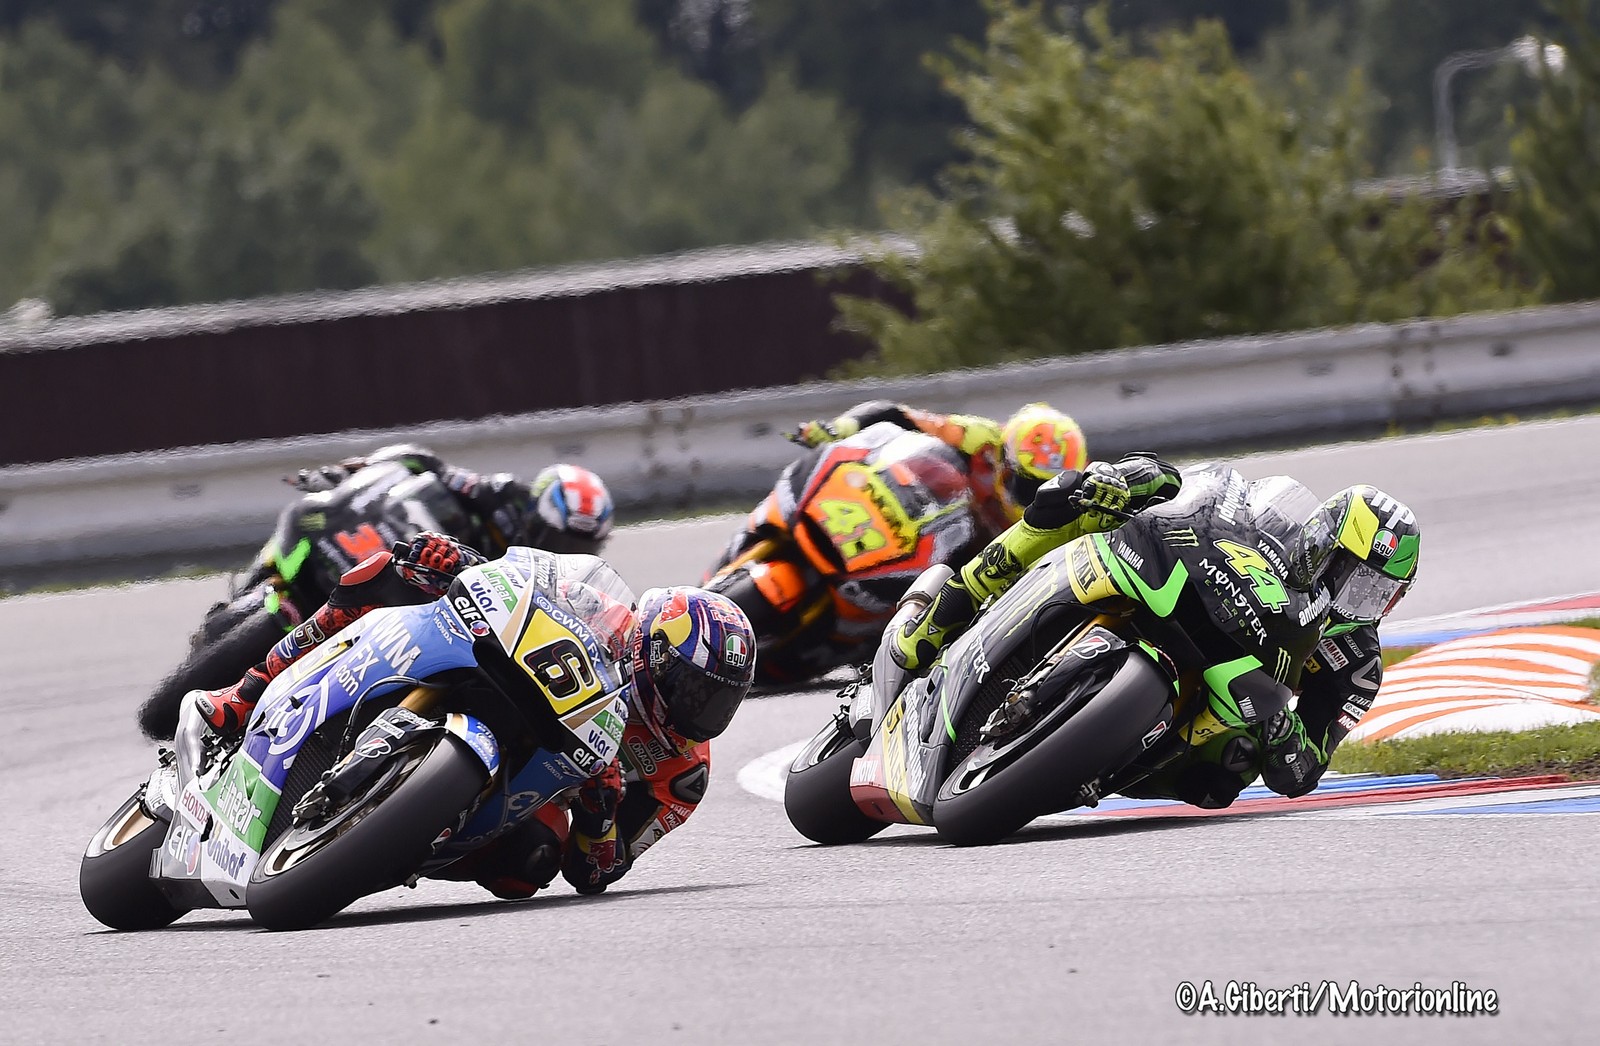 2014 MotoGP season - Wikipedia